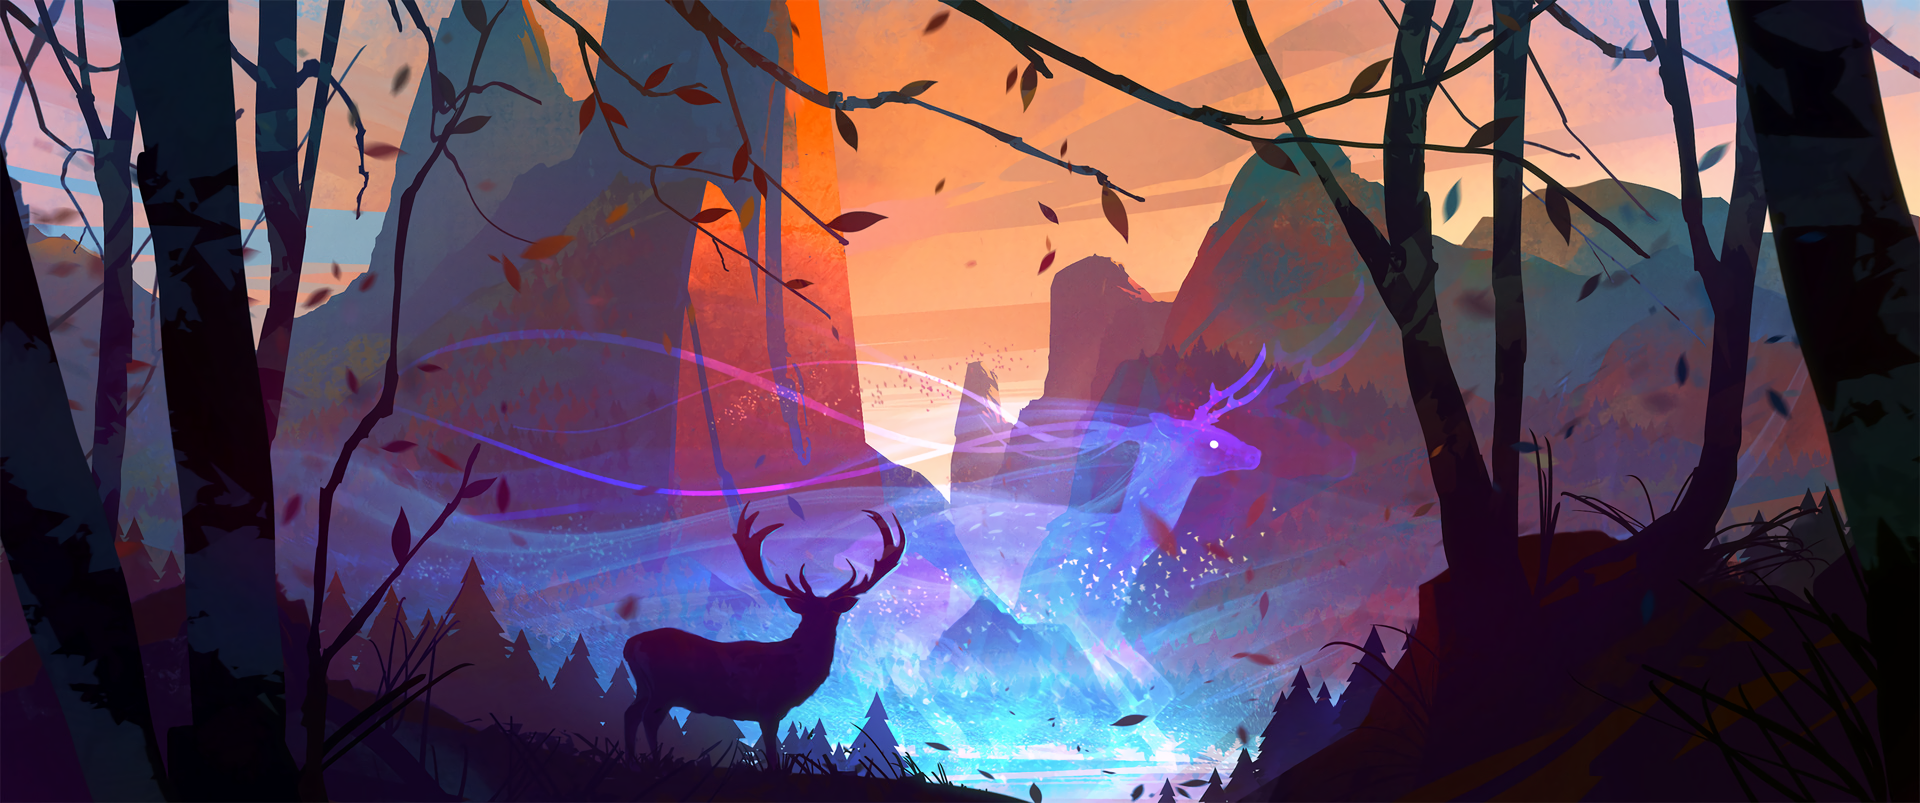 Digital Art Artwork Illustration Forest Trees Deer Animals Rocks Mountains Bastien Grivet Sky Ultraw 1920x803